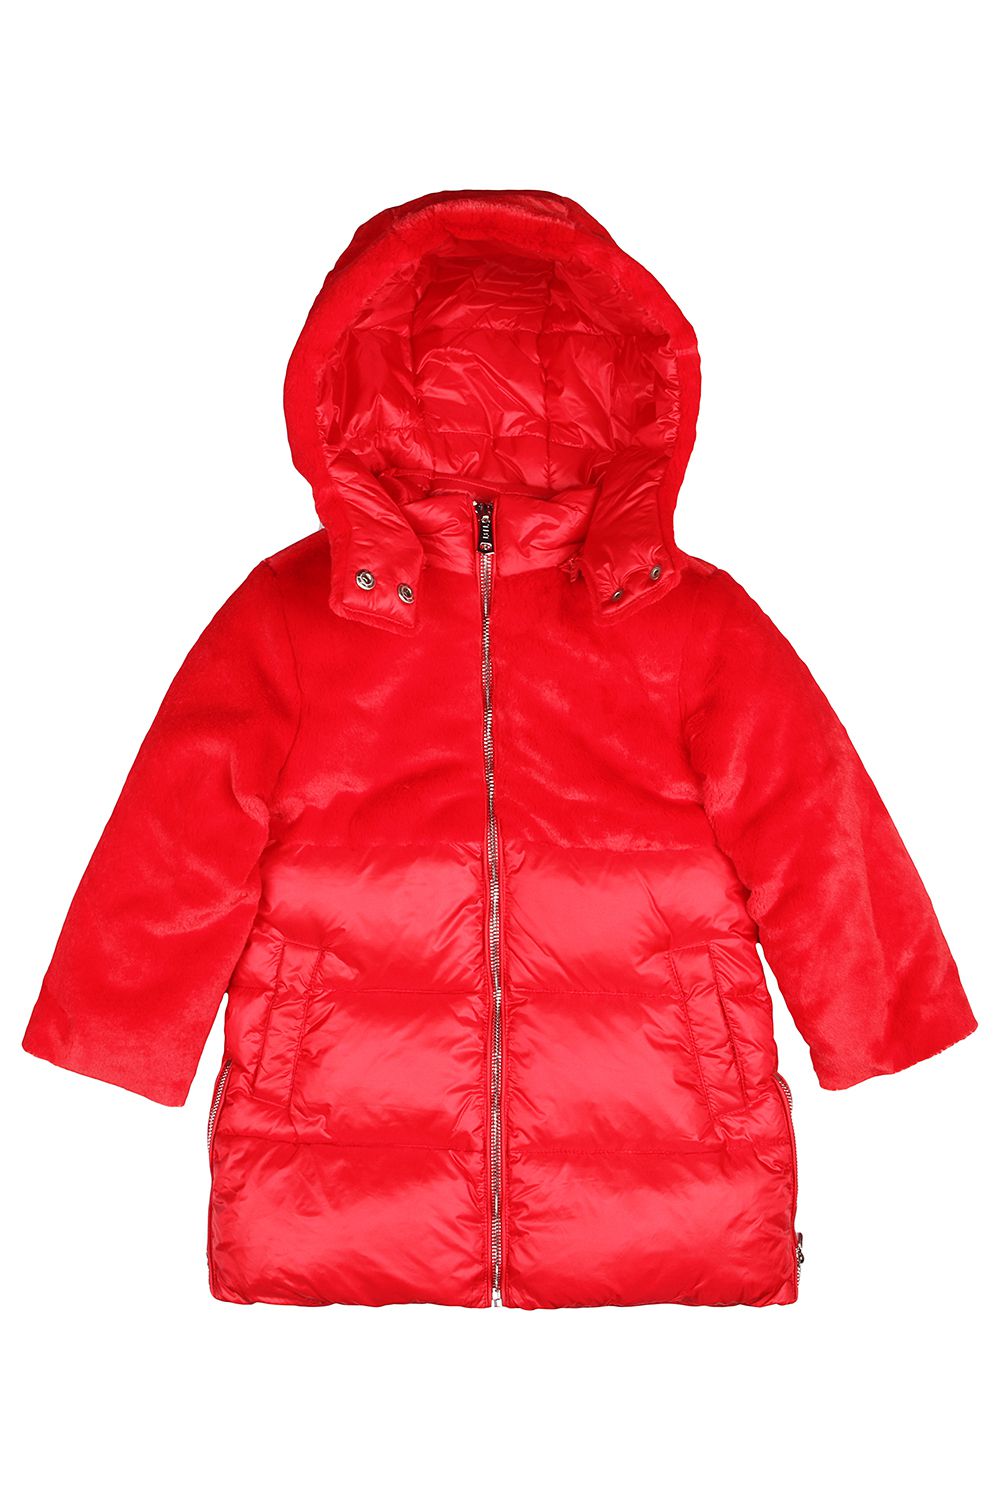 Куртка To Be Too, размер 98, цвет красный TF19987 - фото 2